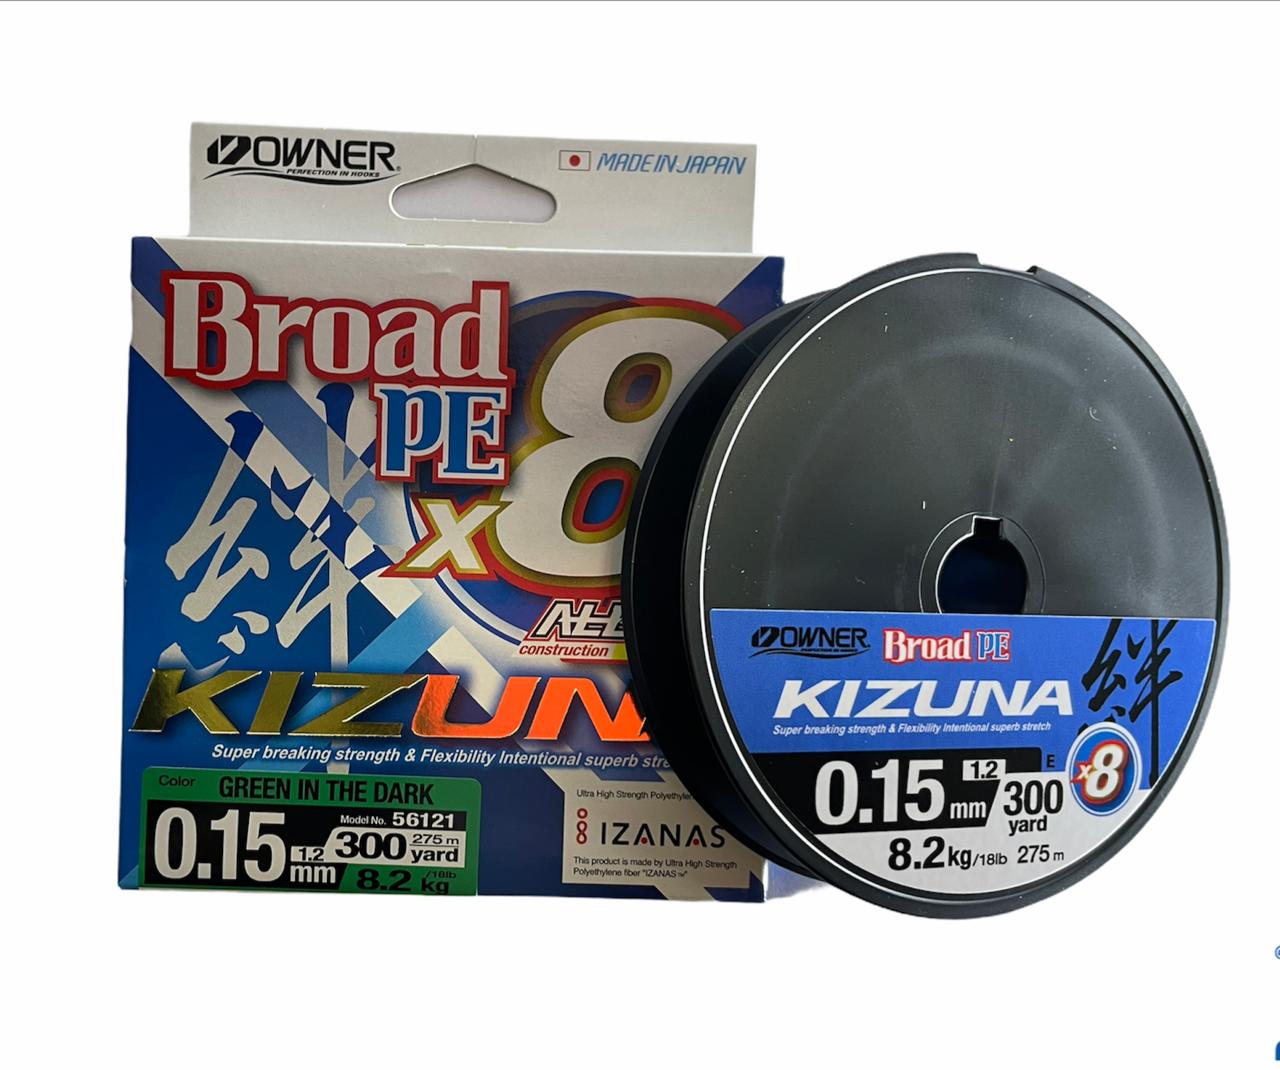 Owner kizuna Broad PE X8 0.15 8.2kg 275m (verde oscuro)